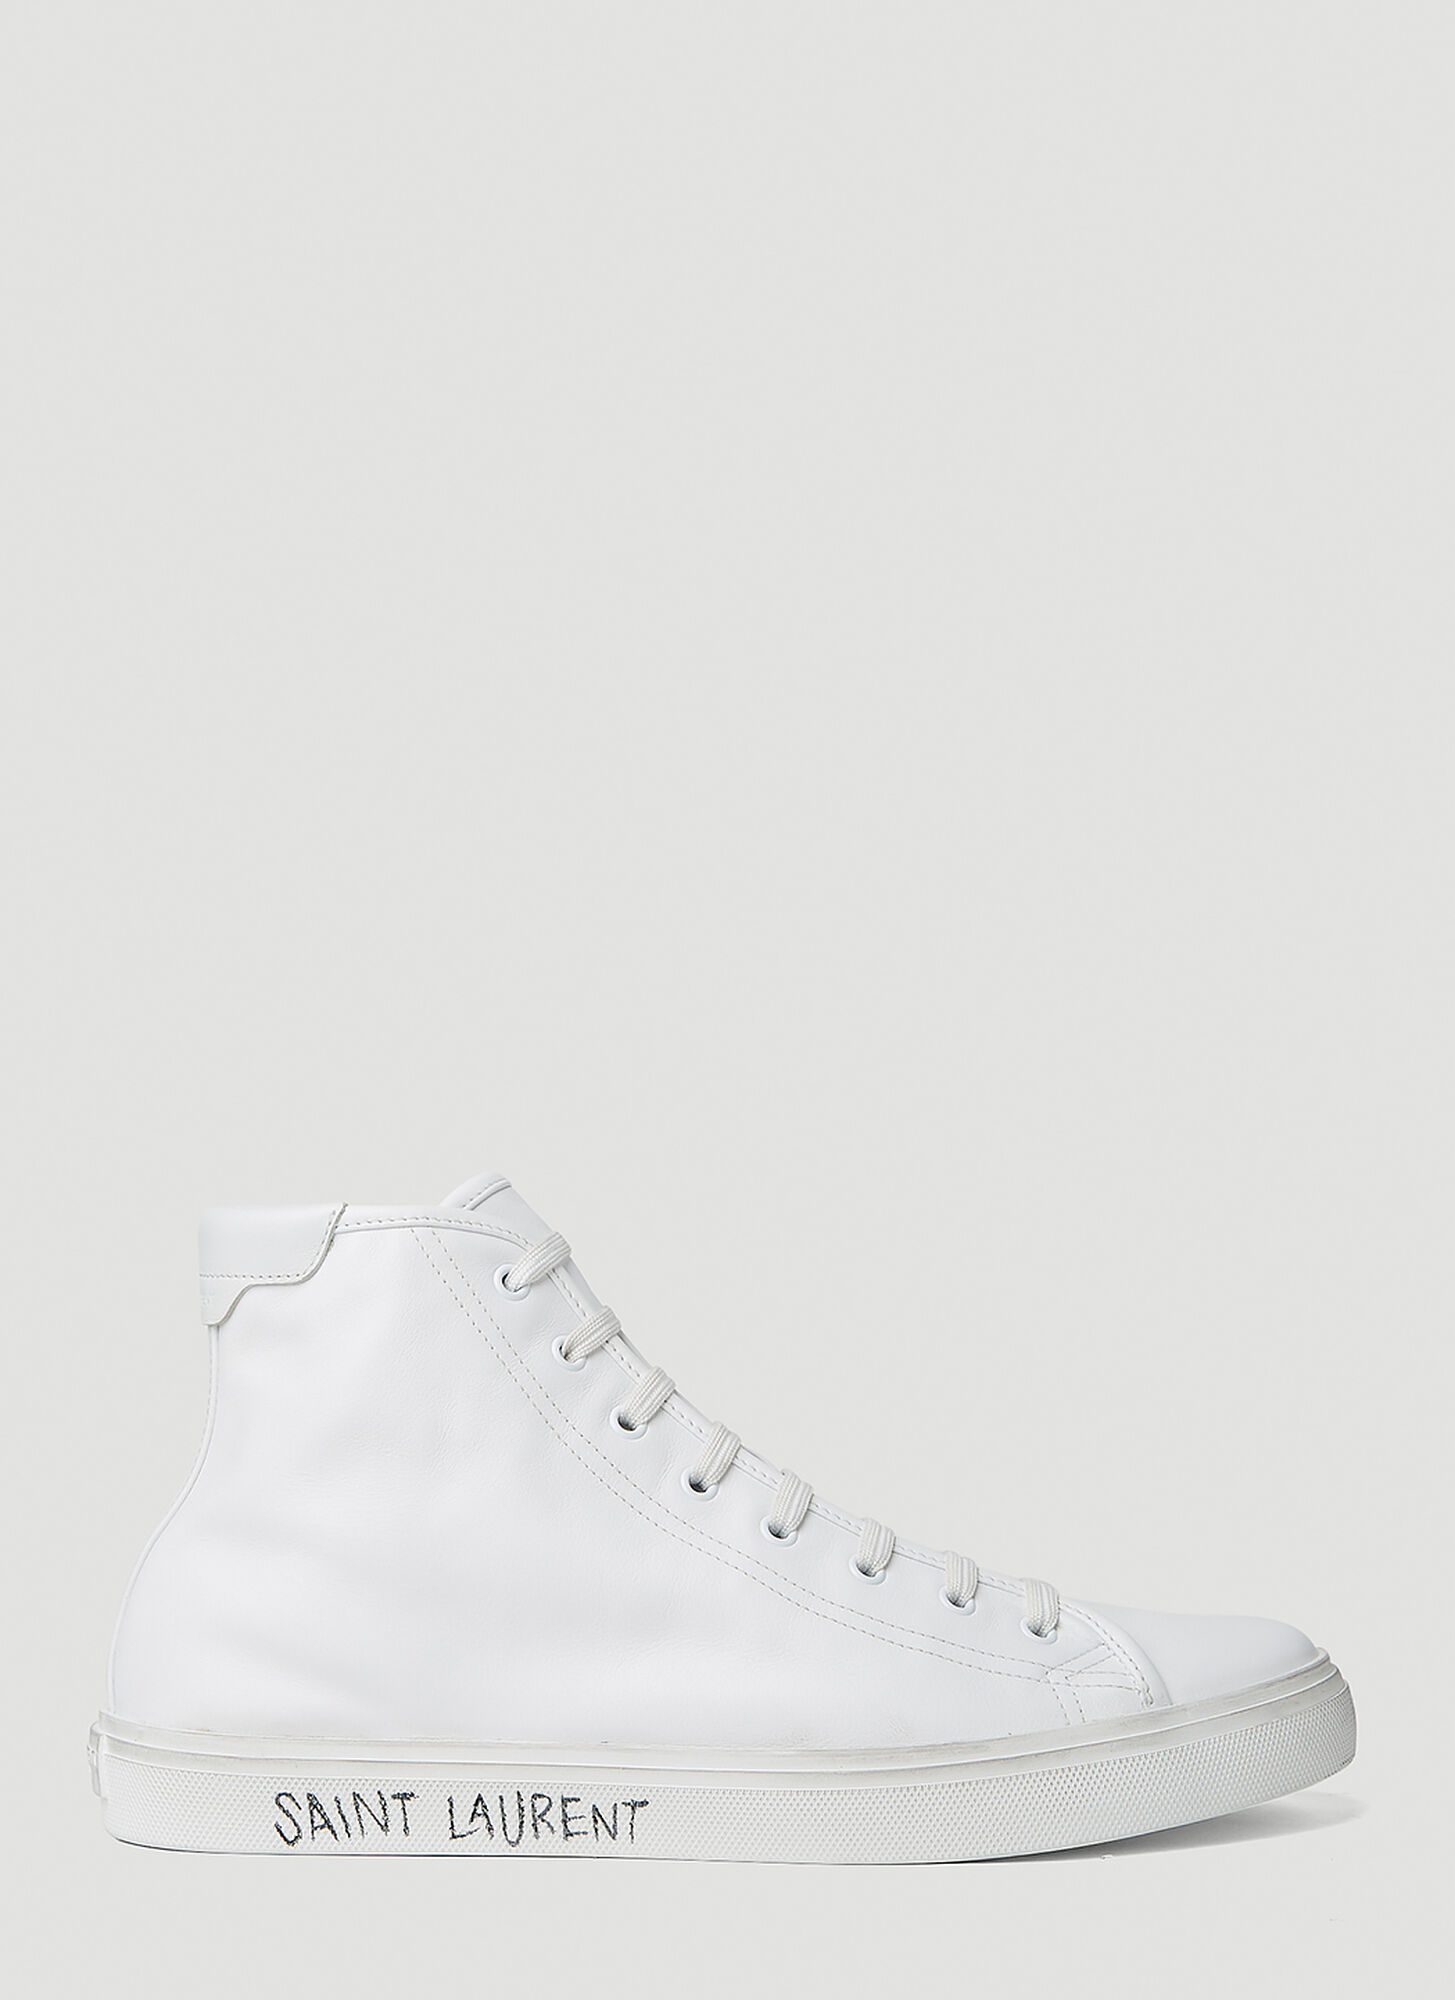 Saint Laurent Malibu 05 High Top Sneakers Male White